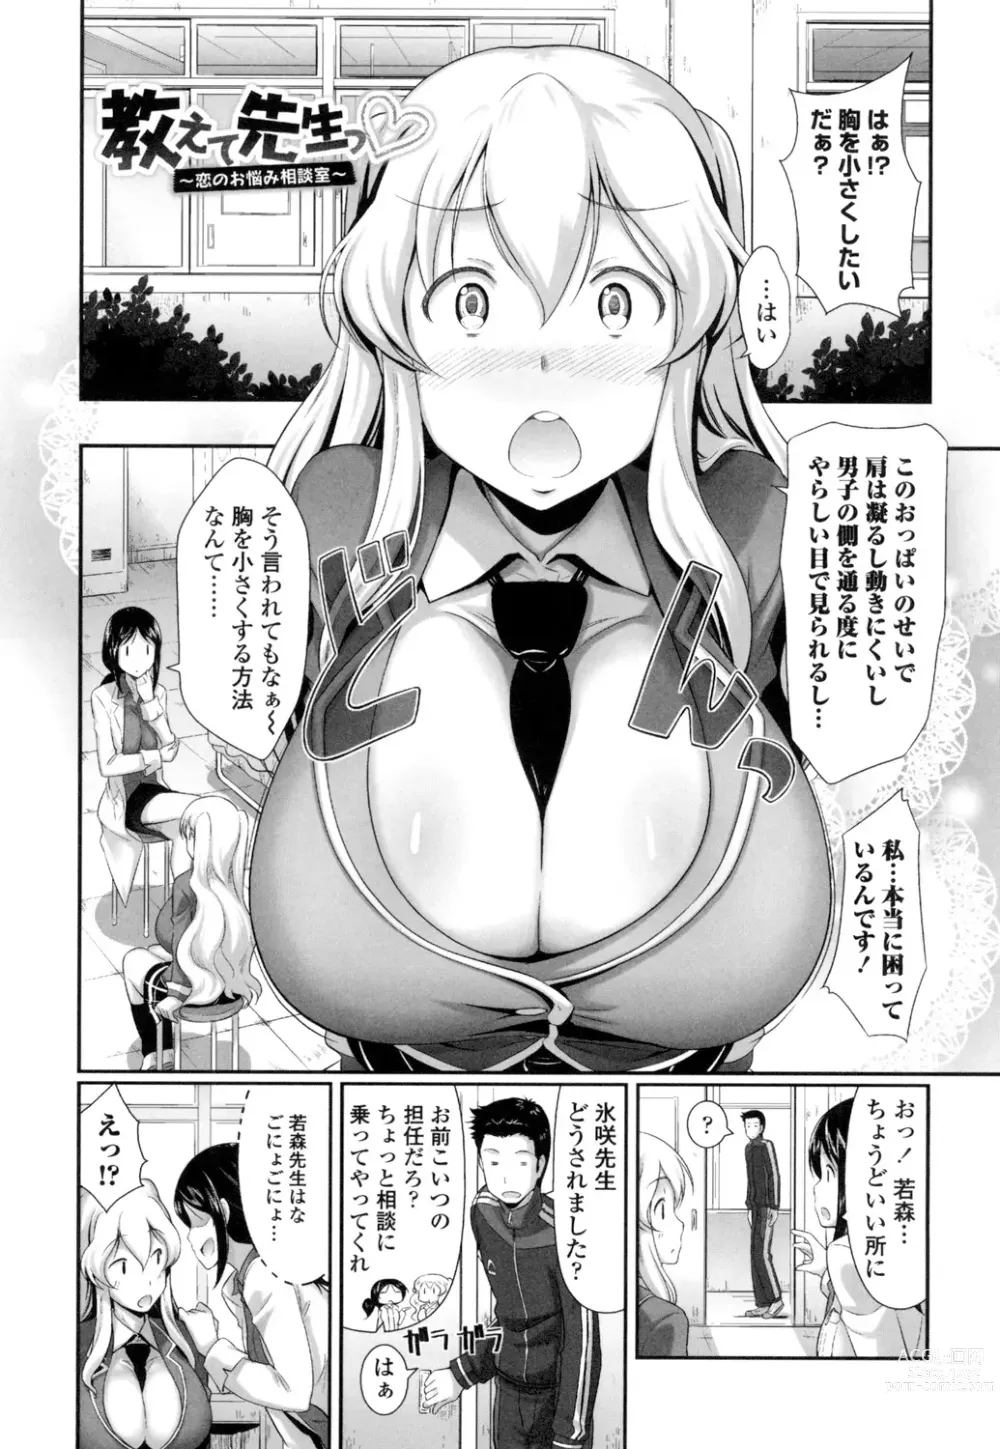 Page 4 of manga Oshiete Sensei